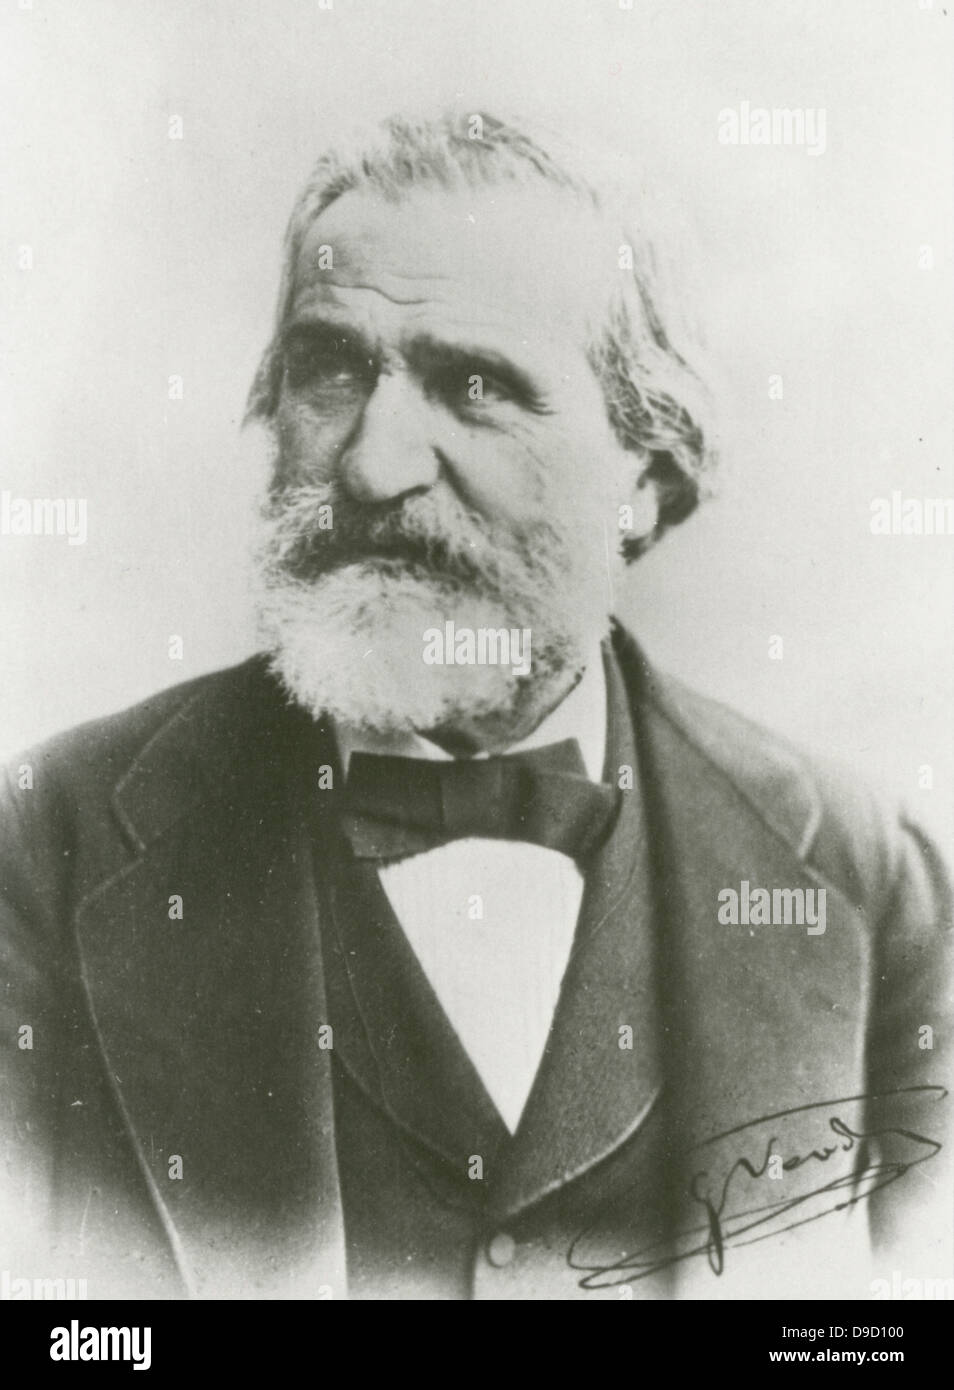 Giuseppe Verdi (1813-1901) Italian Romantic composer, many of whose operas are standard repertoire in the worlds operea houses. Stock Photo